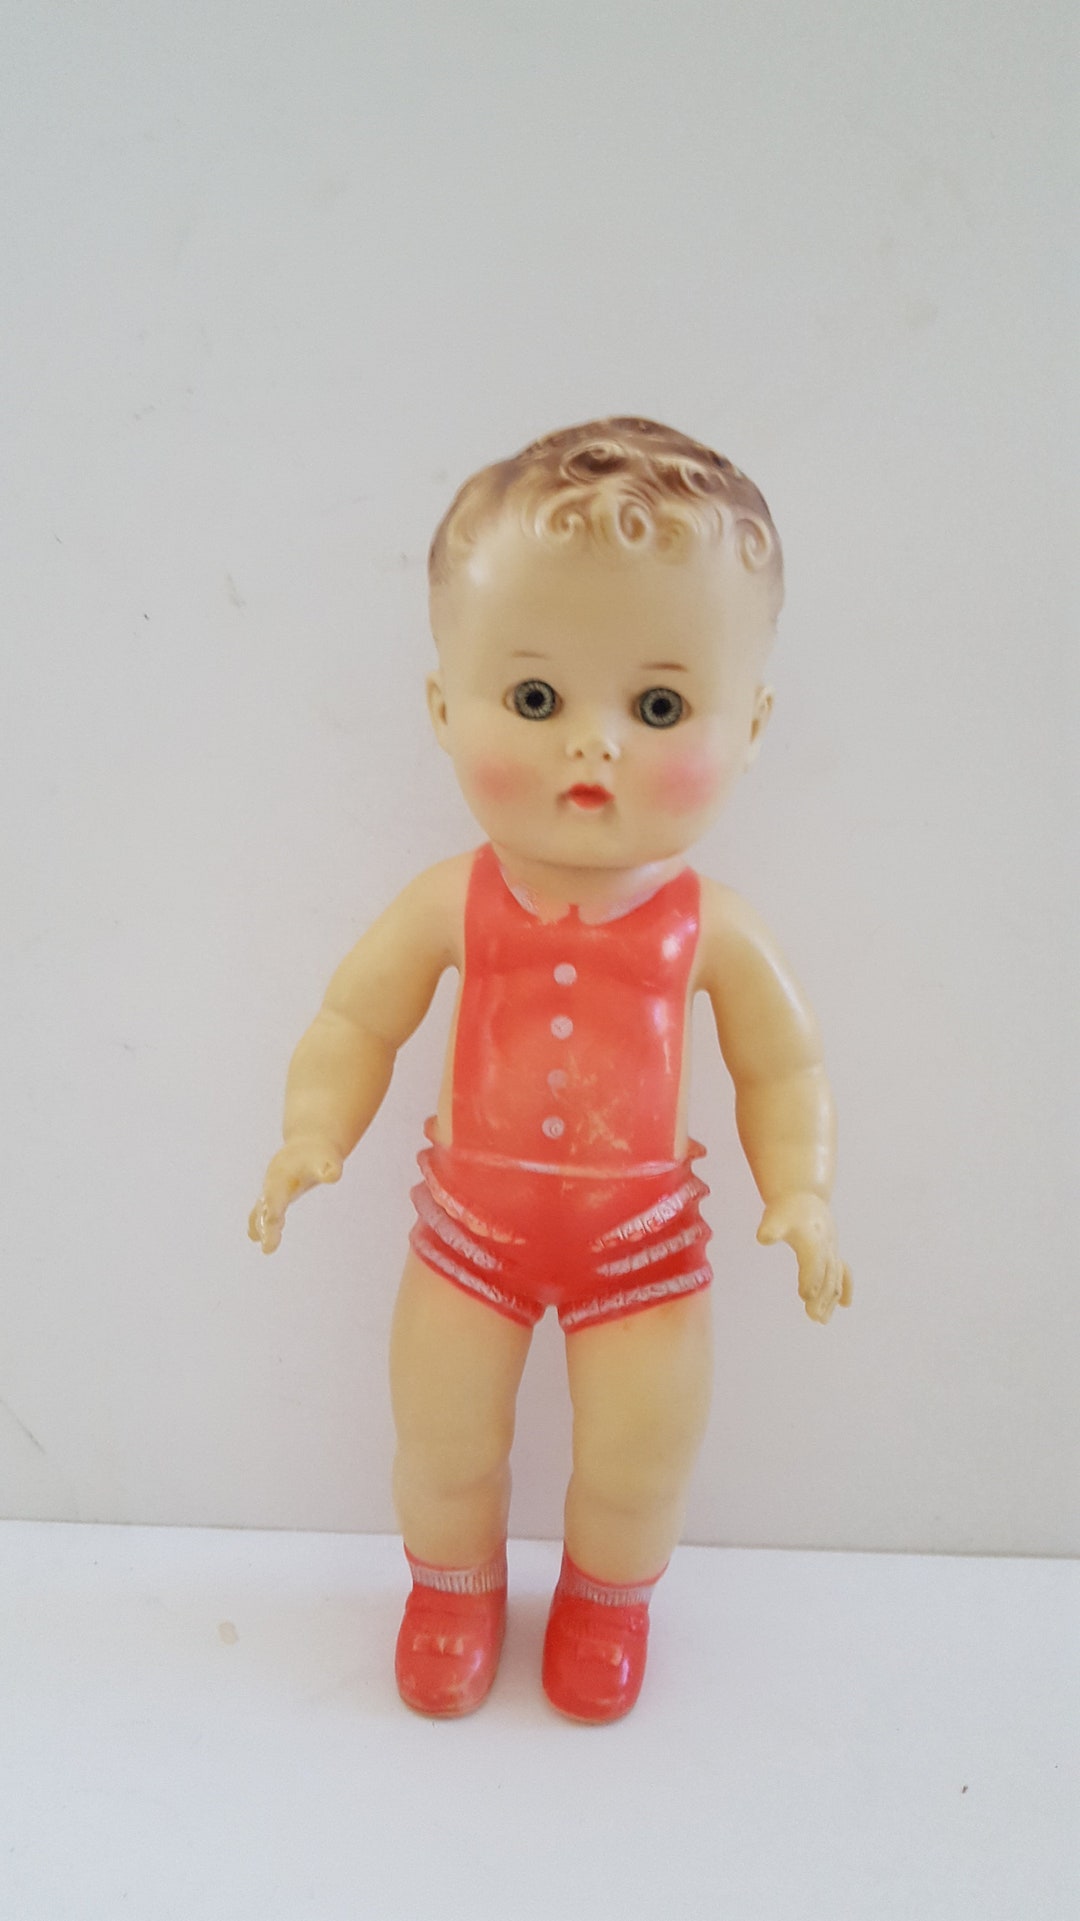 Vintage Circa 1956 U.S. Sun Rubber Company Baby Doll - Etsy